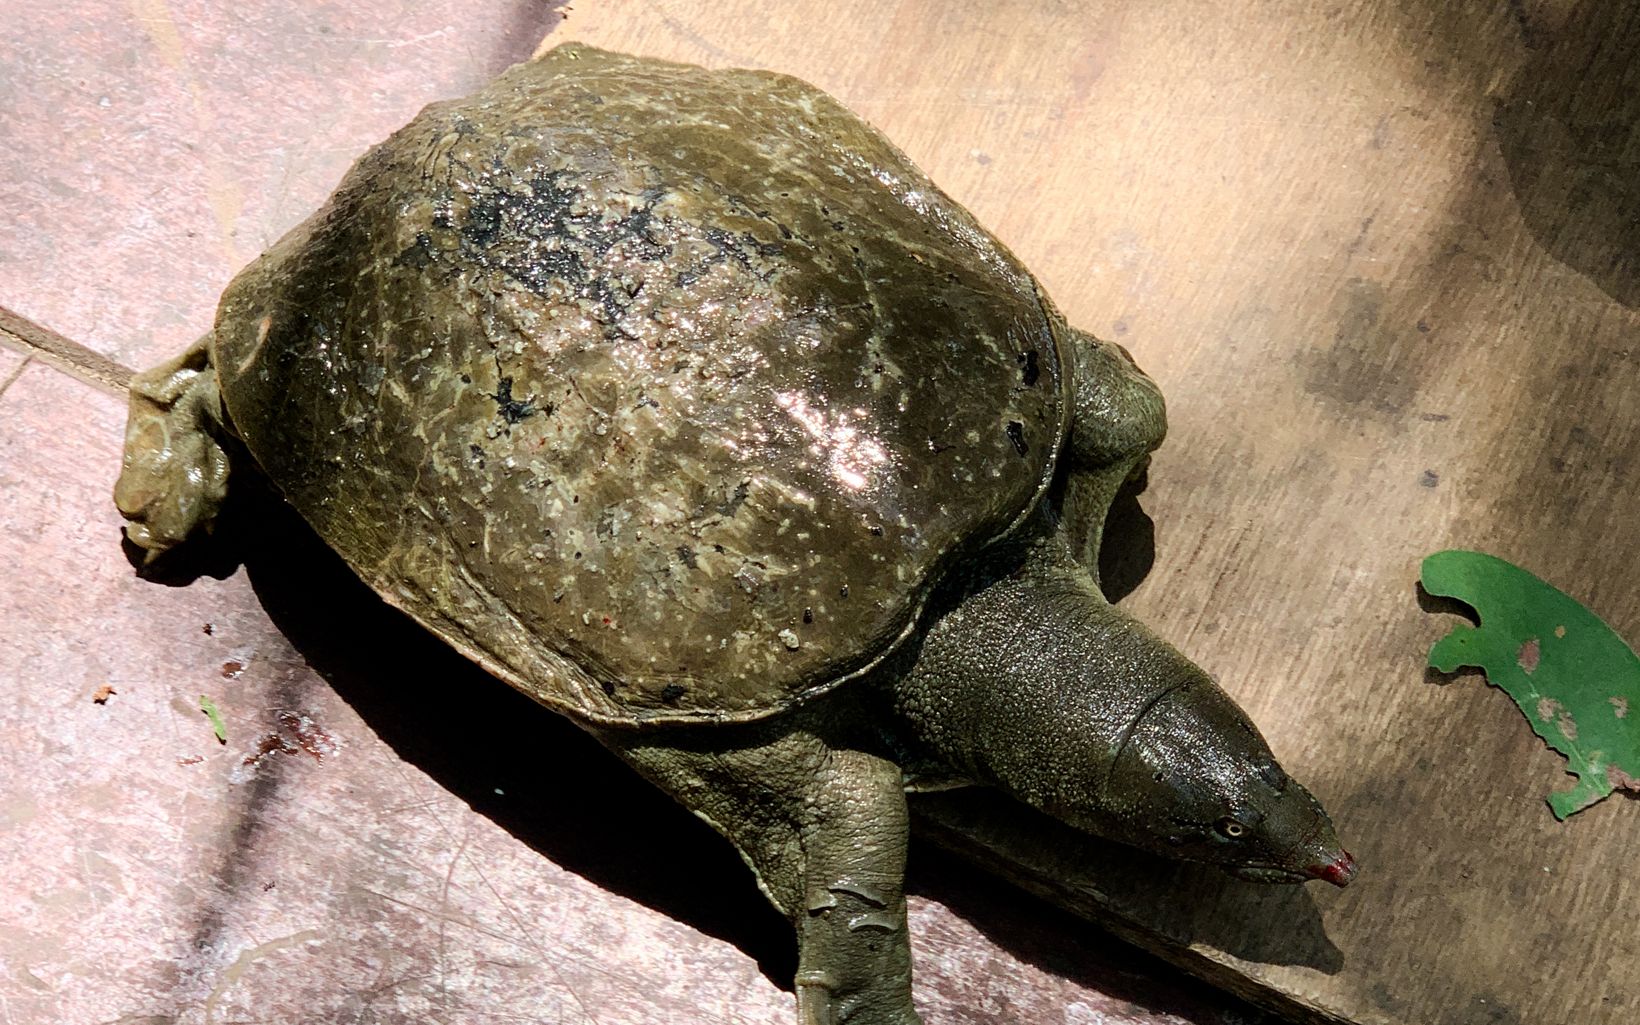  Chinese softshell-turtle/labi-labi cina (Pelodiscus sinensis) 